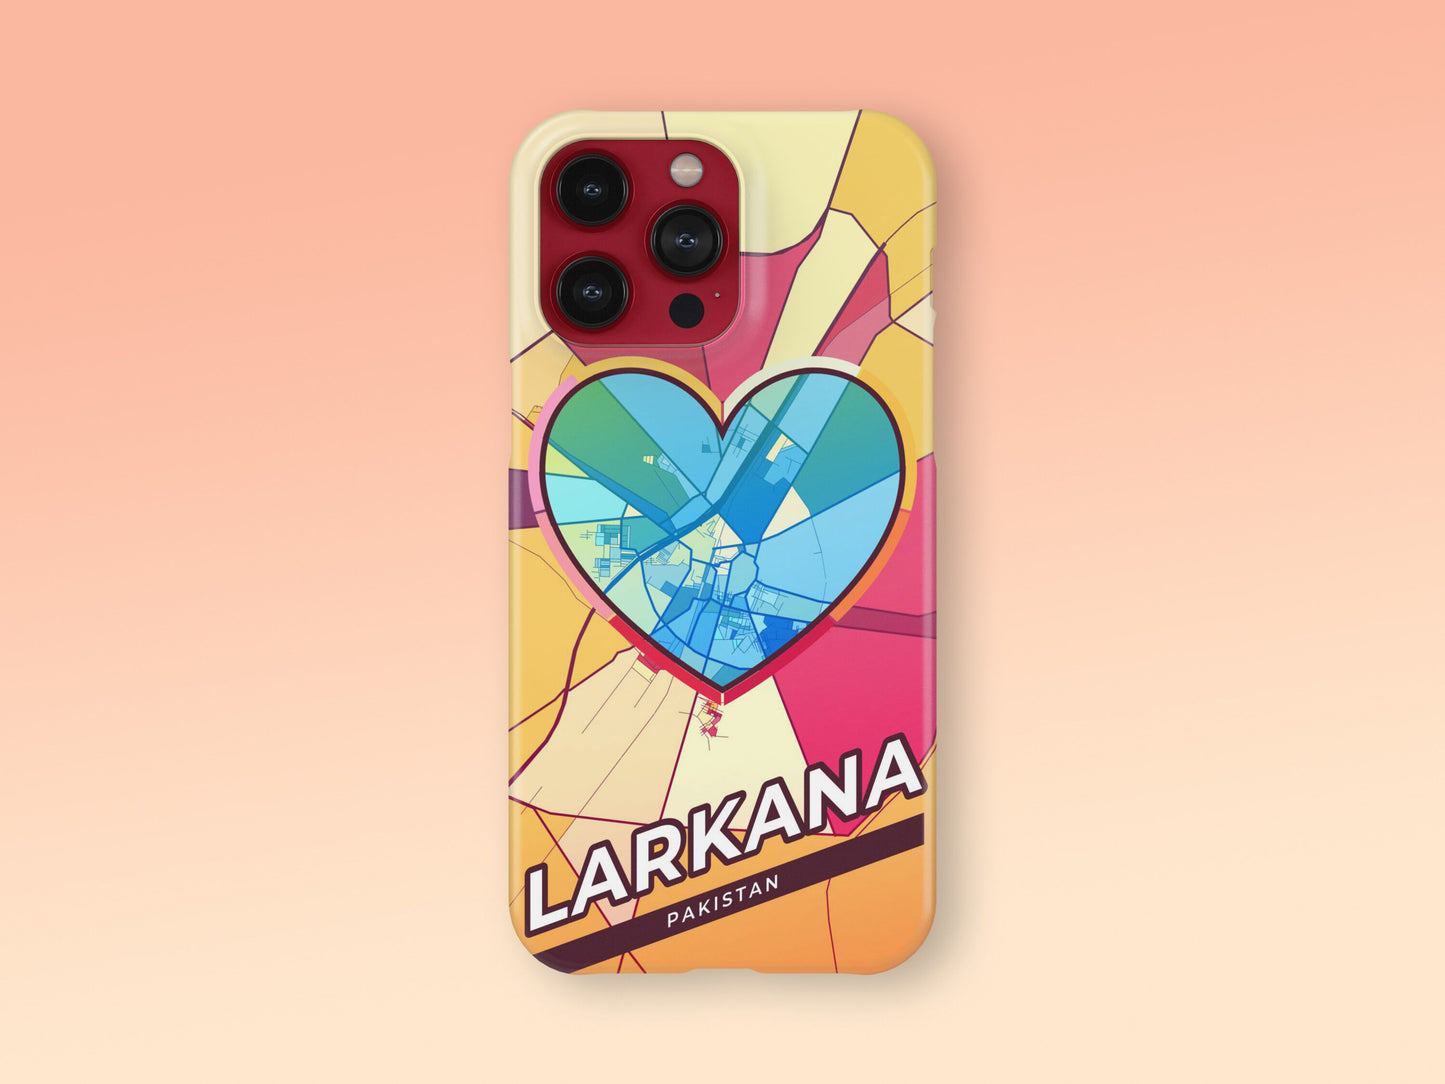 Larkana Pakistan slim phone case with colorful icon. Birthday, wedding or housewarming gift. Couple match cases. 2